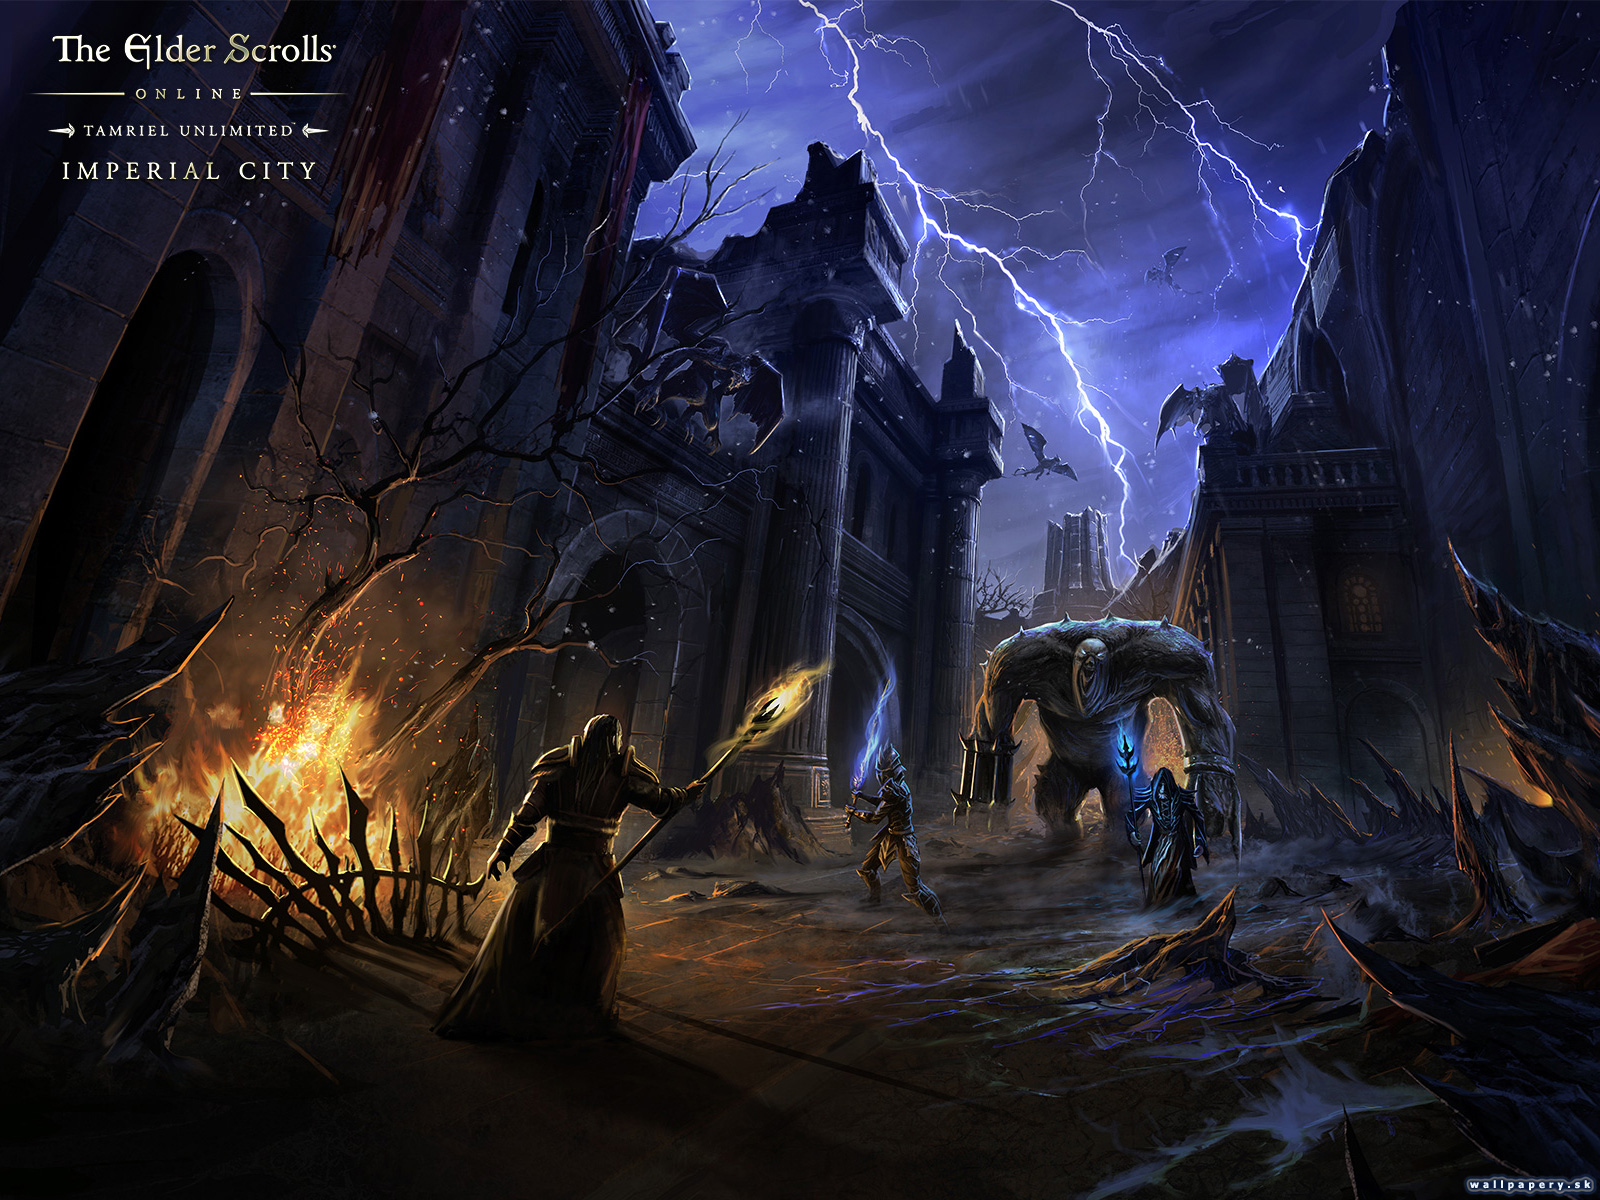 The Elder Scrolls Online: Tamriel Unlimited - Imperial City - wallpaper 2